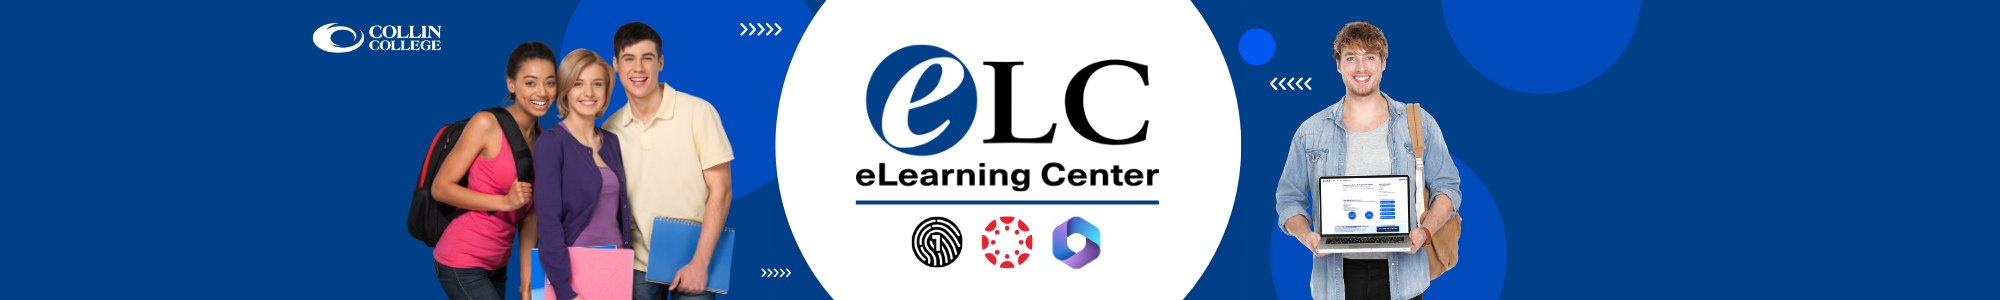 eLC homepage banner